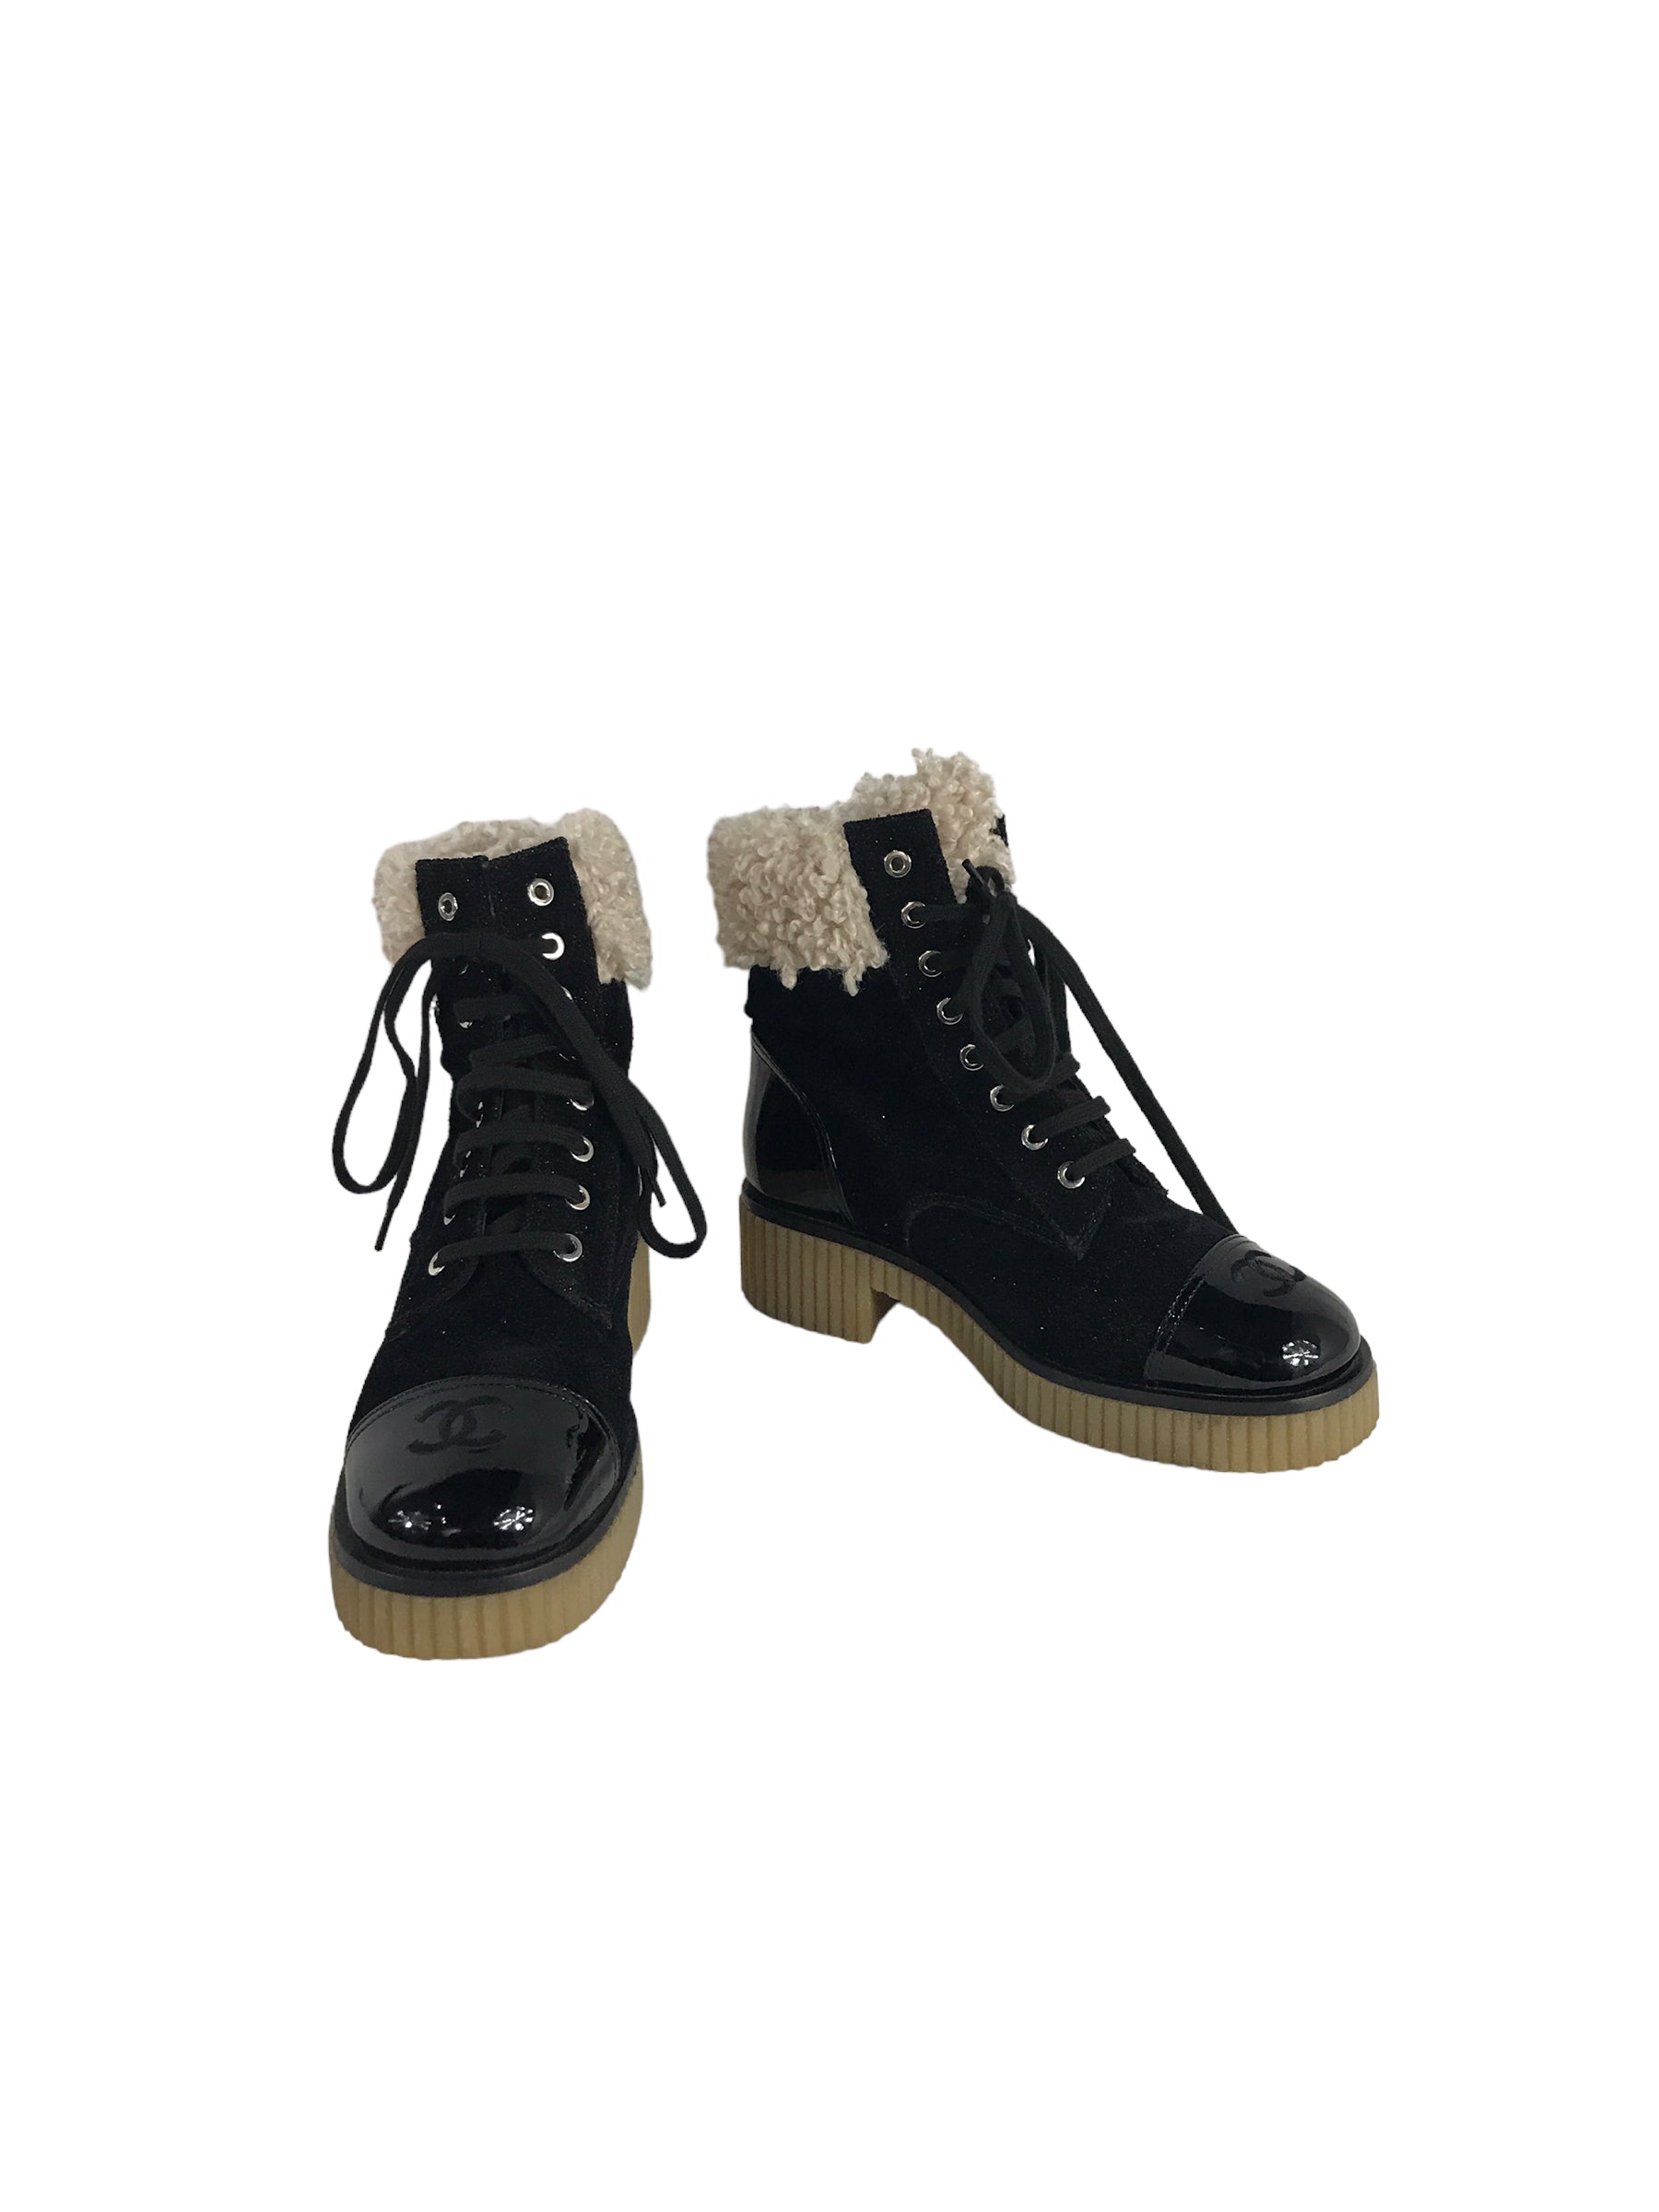 Black Glitter Tweed/Patent leather Cap Toe Shearling CC Combat